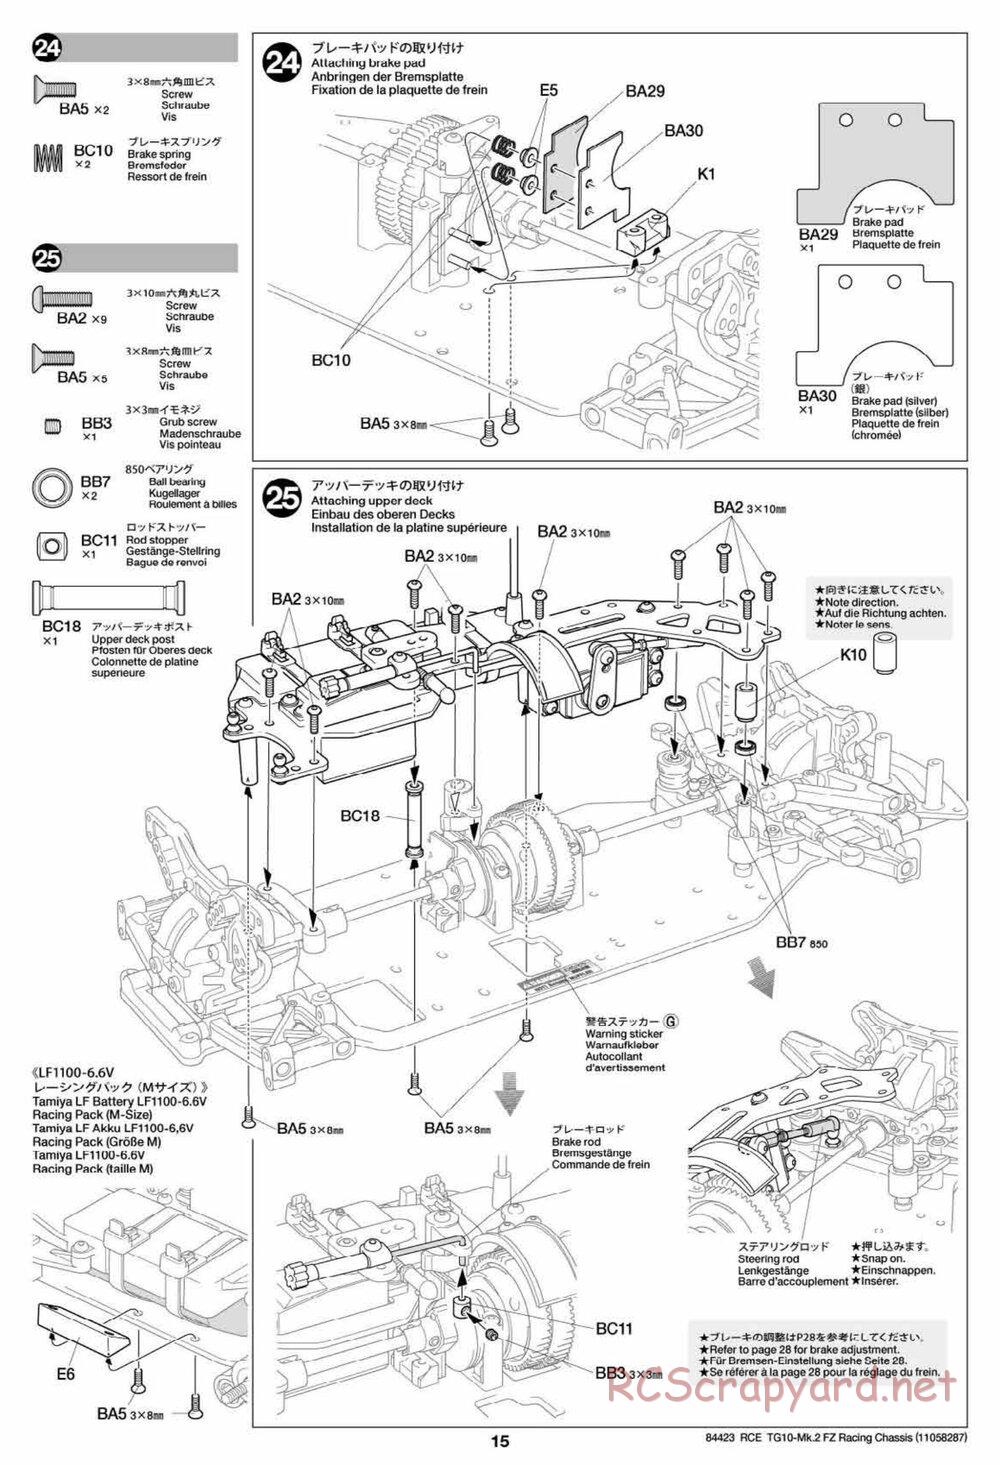 Tamiya - TG10 Mk.2 FZ Racing Chassis - Manual - Page 15